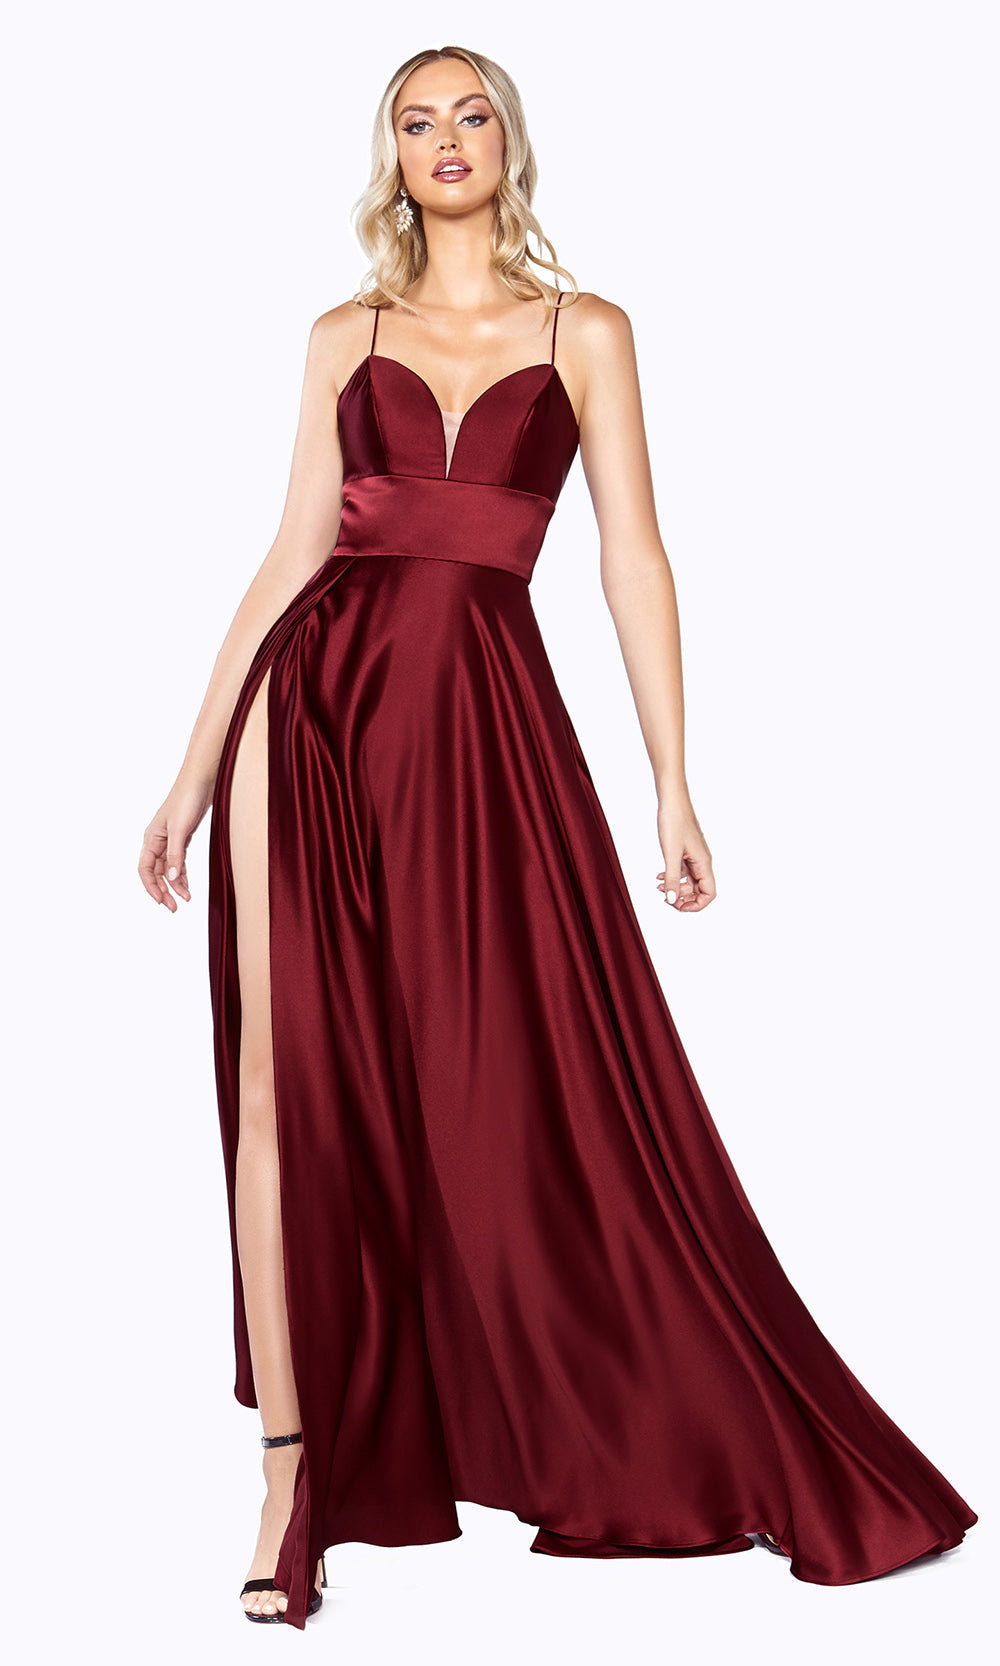 Ladivine CJ523 long burgundy red or maroon or dark red satin dress with v neck, straps, & high slit. Plus sizes available..jpg